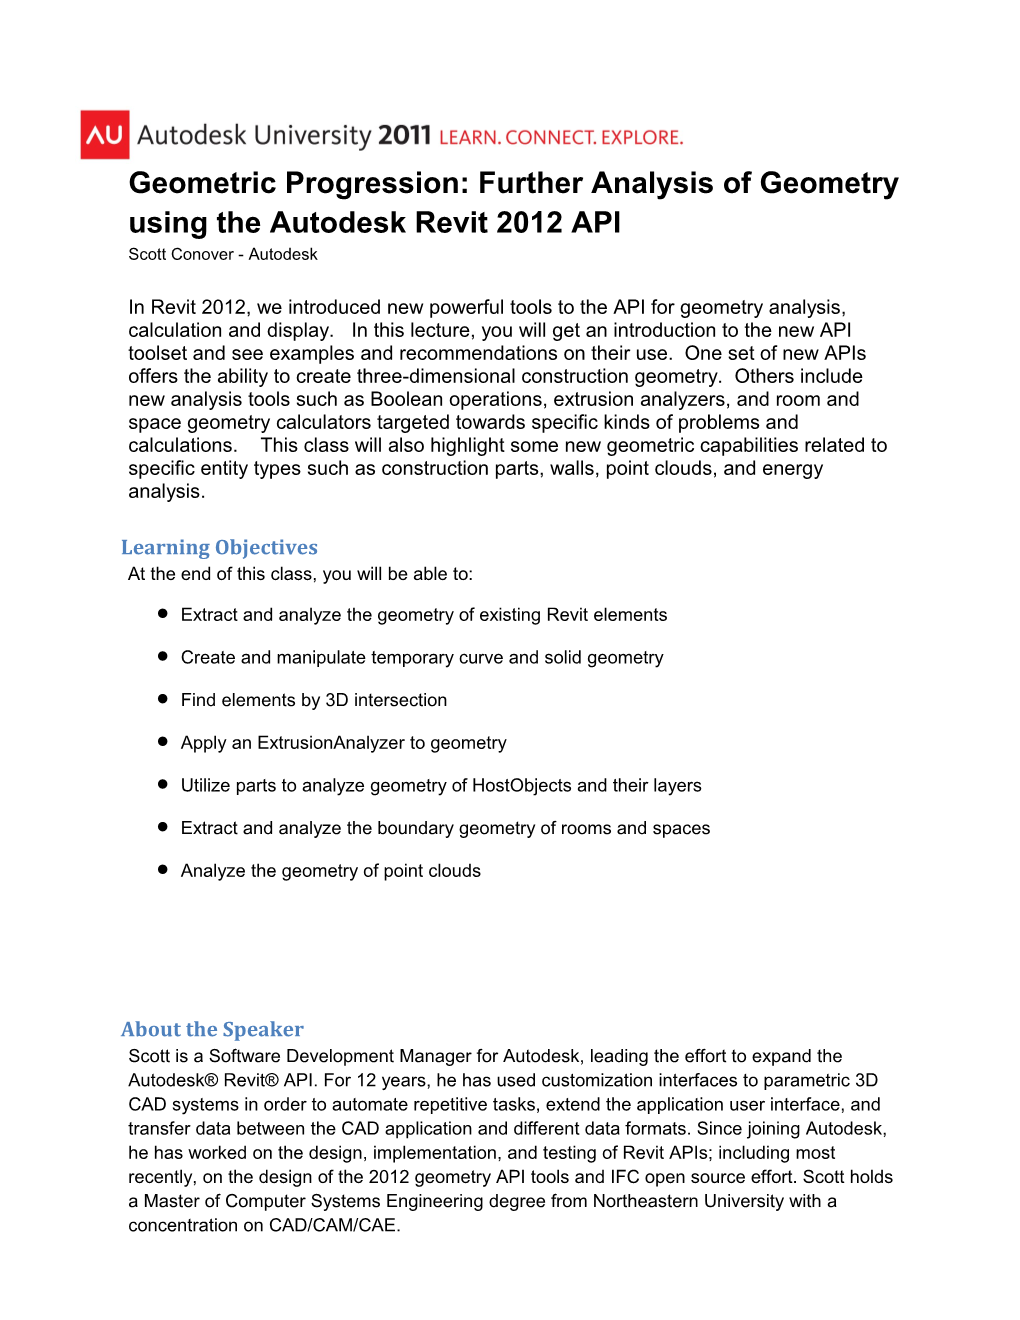 Geometric Progression: Further Analysis of Geometry Using the Autodesk Revit 2012 API